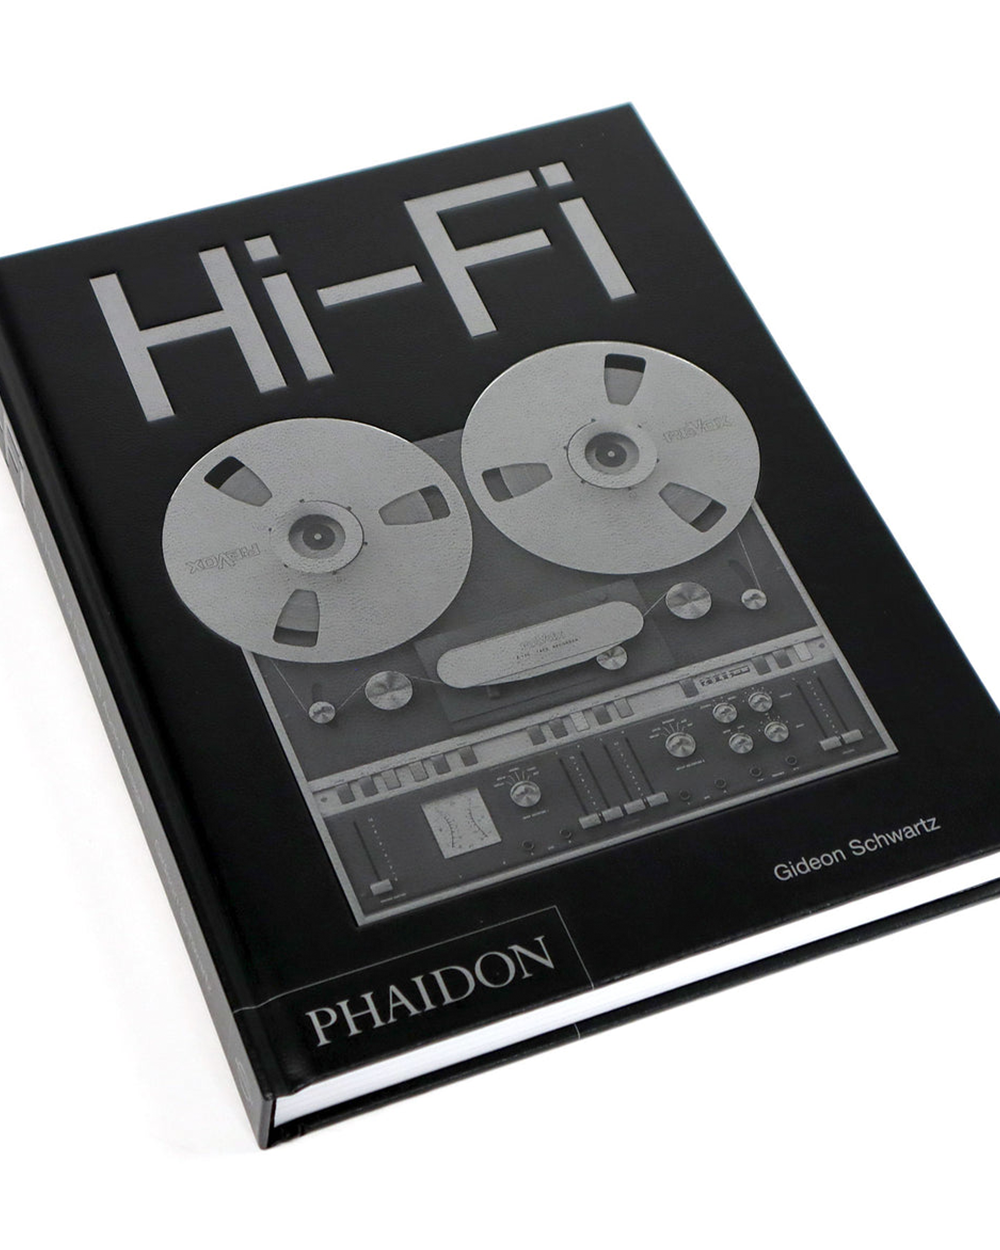 Hi-Fi - History High-End Audio Design